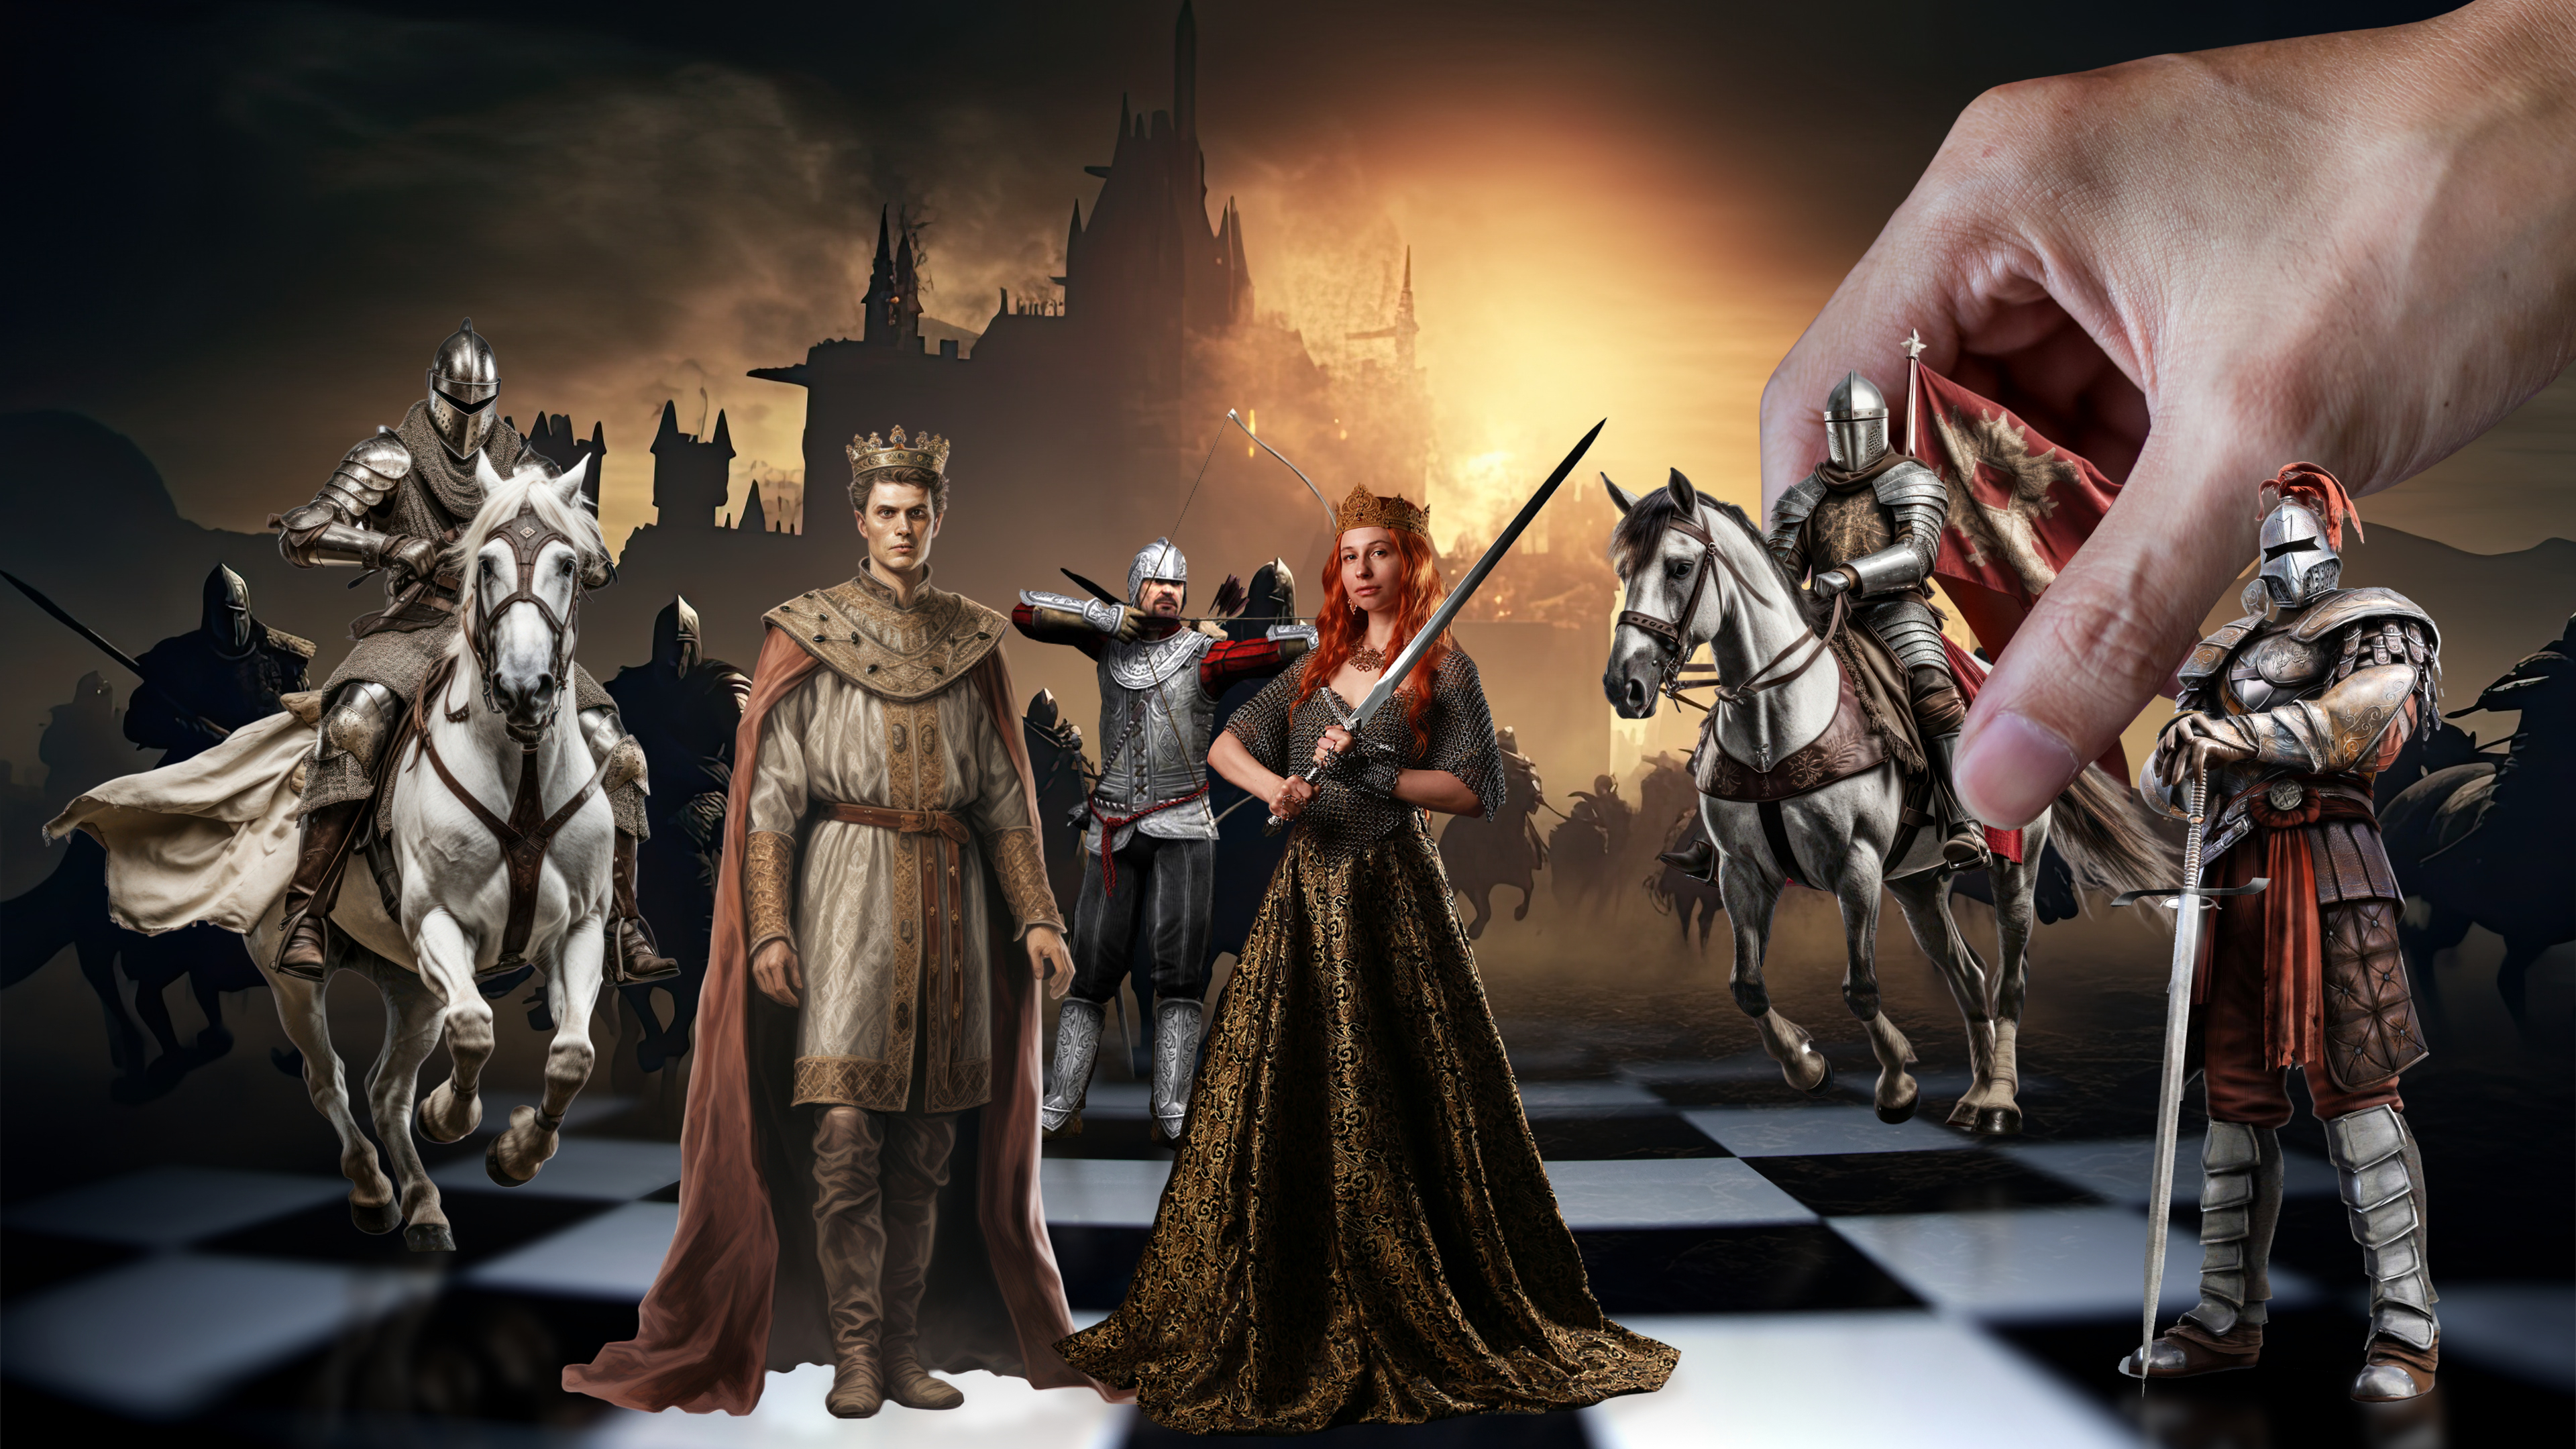 Battle Chess (4K Wallpaper) by Jimking on DeviantArt